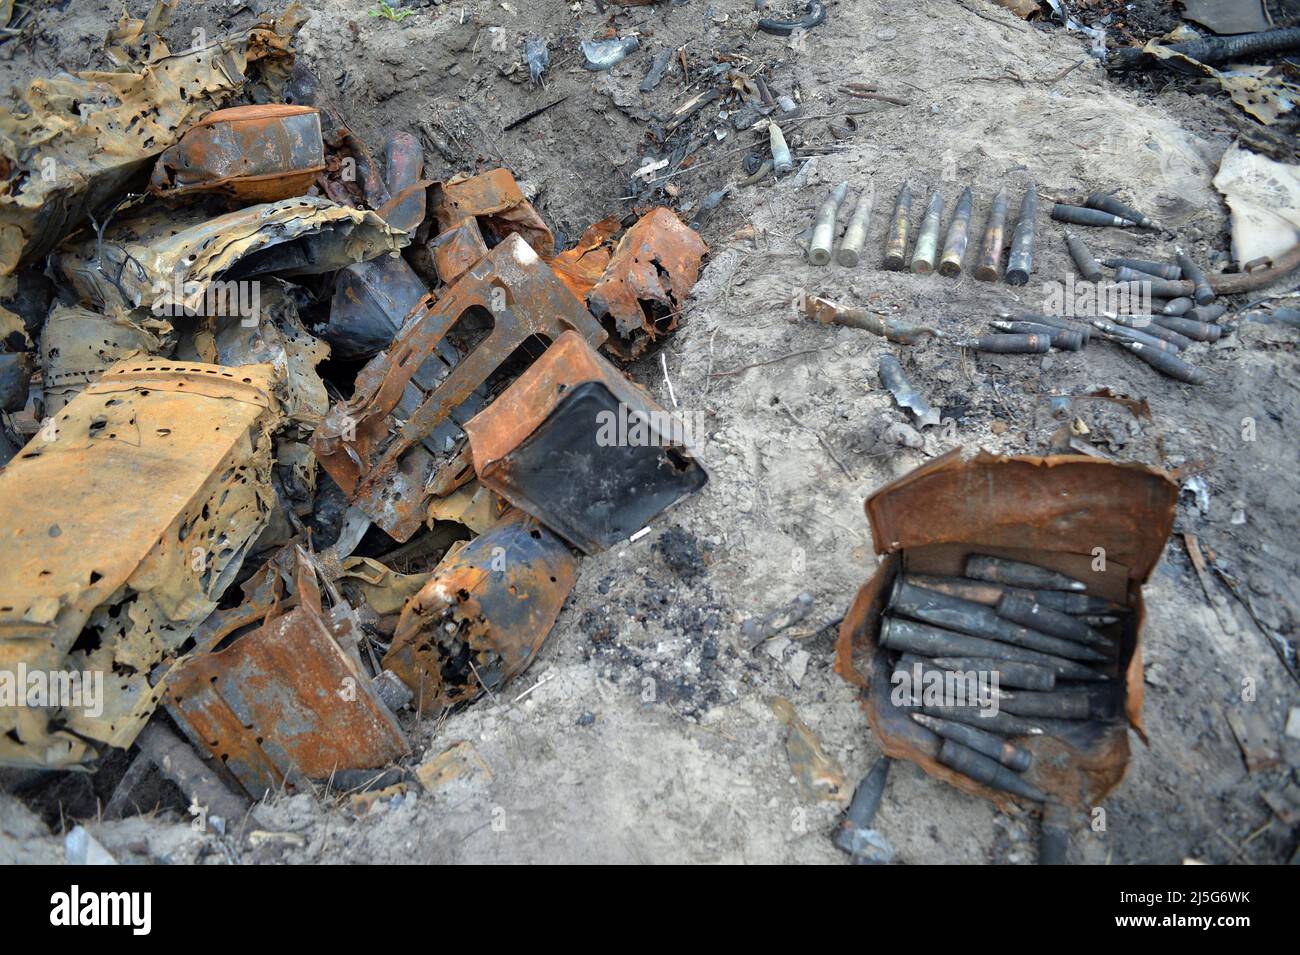 BERVYTSIA, UKRAINE - APRIL 21, 2022 - Ammunition found by Ukrainian forensic investigators lies on the ground in the village of Bervytsia liberated fr Stock Photo